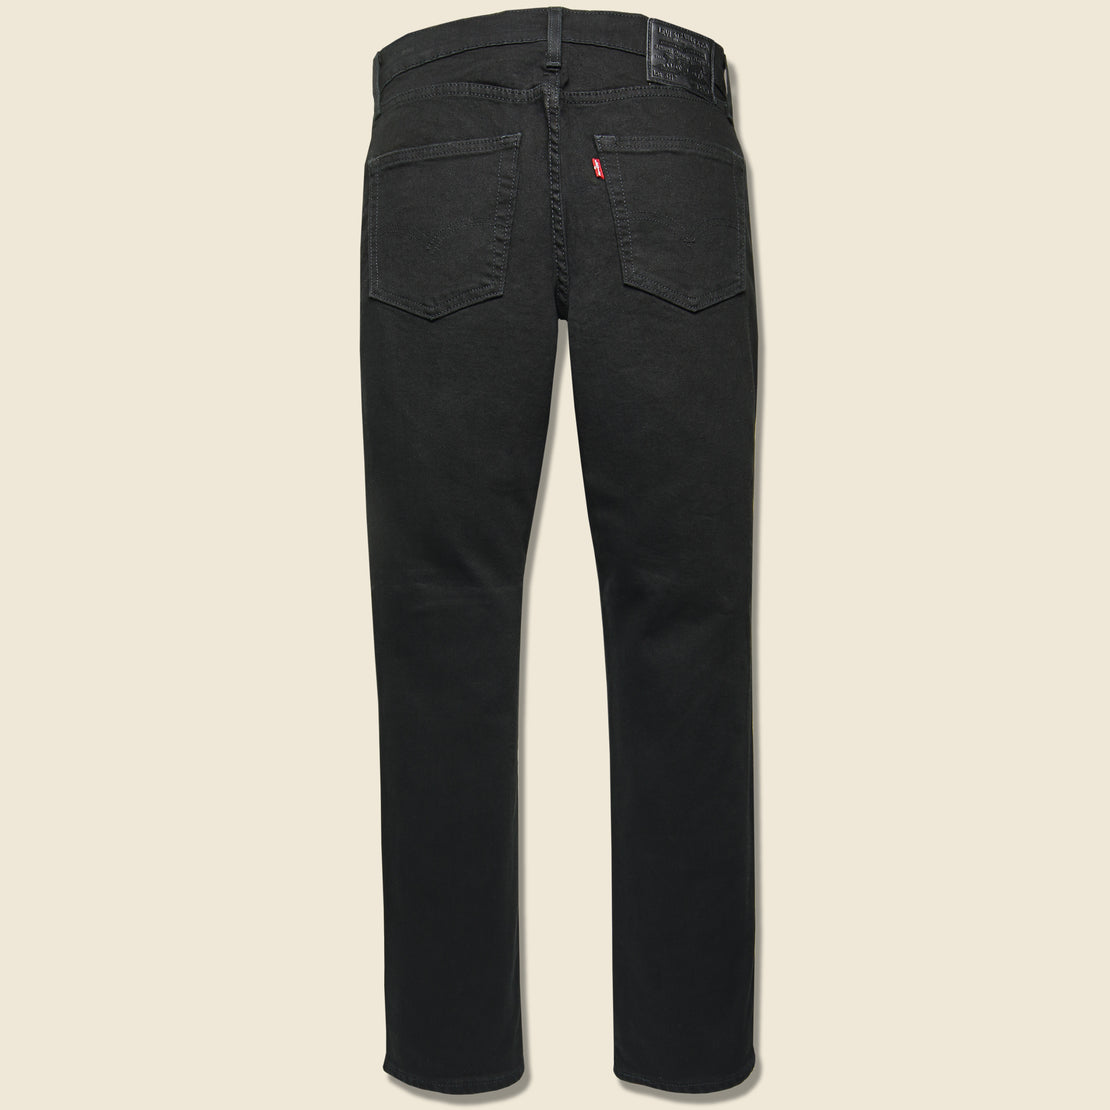 511 Slim Fit Jean - Nightshine - Levis Premium - STAG Provisions - Pants - Denim